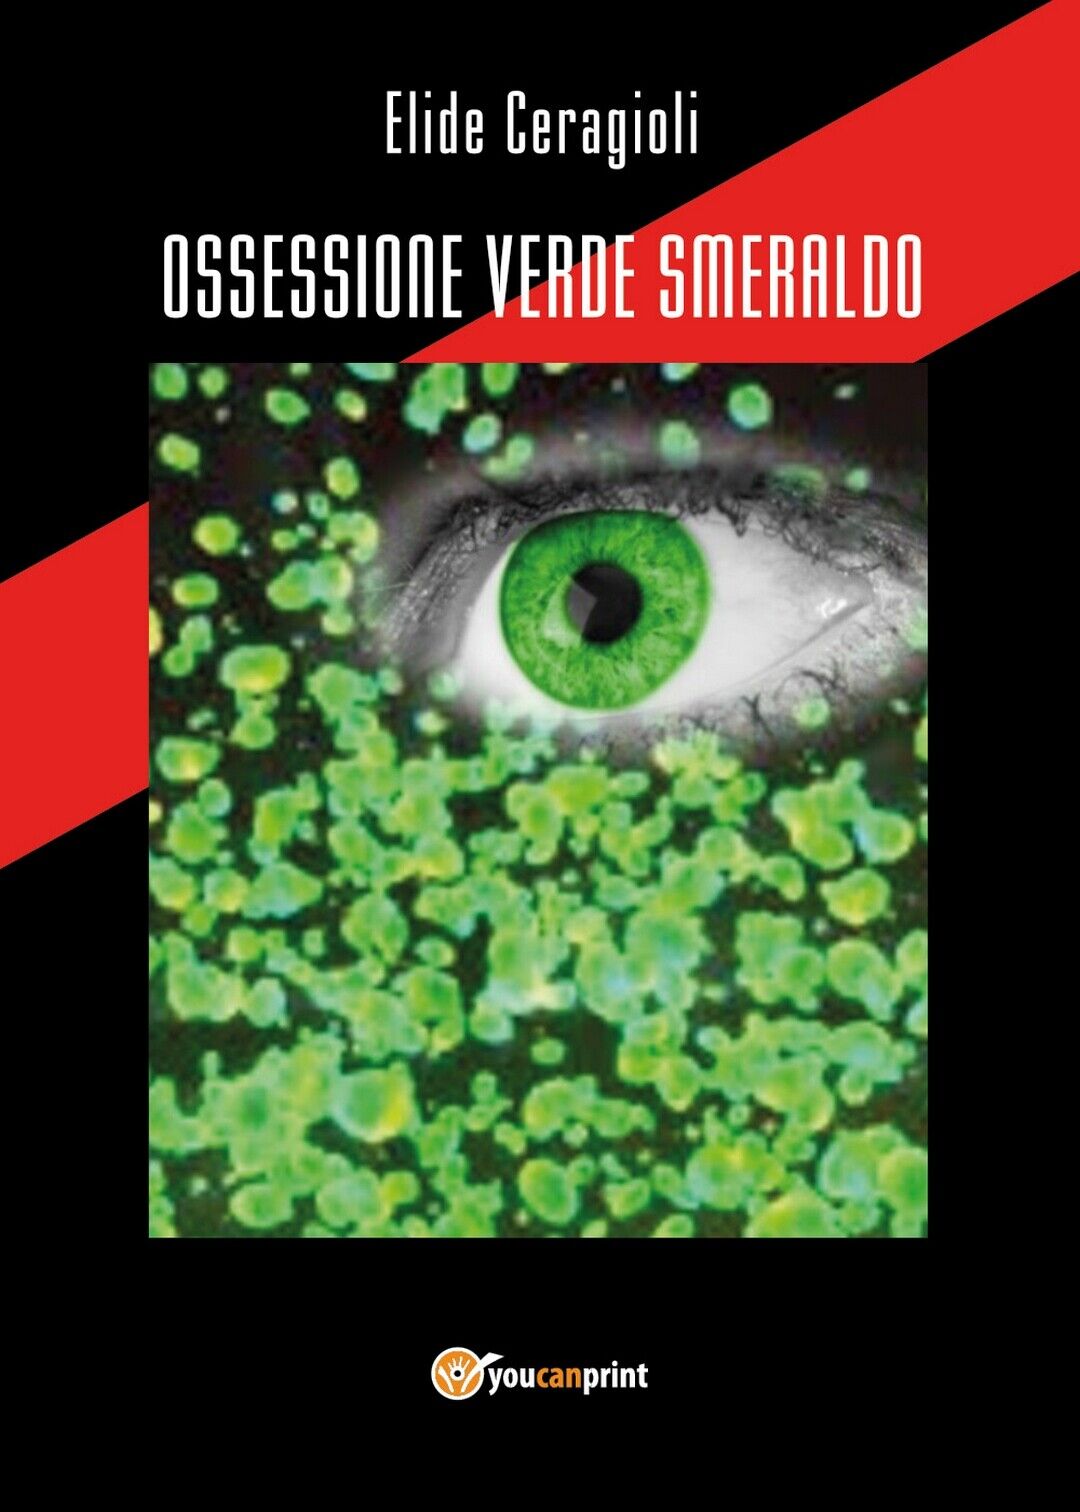 Ossessione verde smeraldo  di Elide Ceragioli,  2019,  Youcanprint